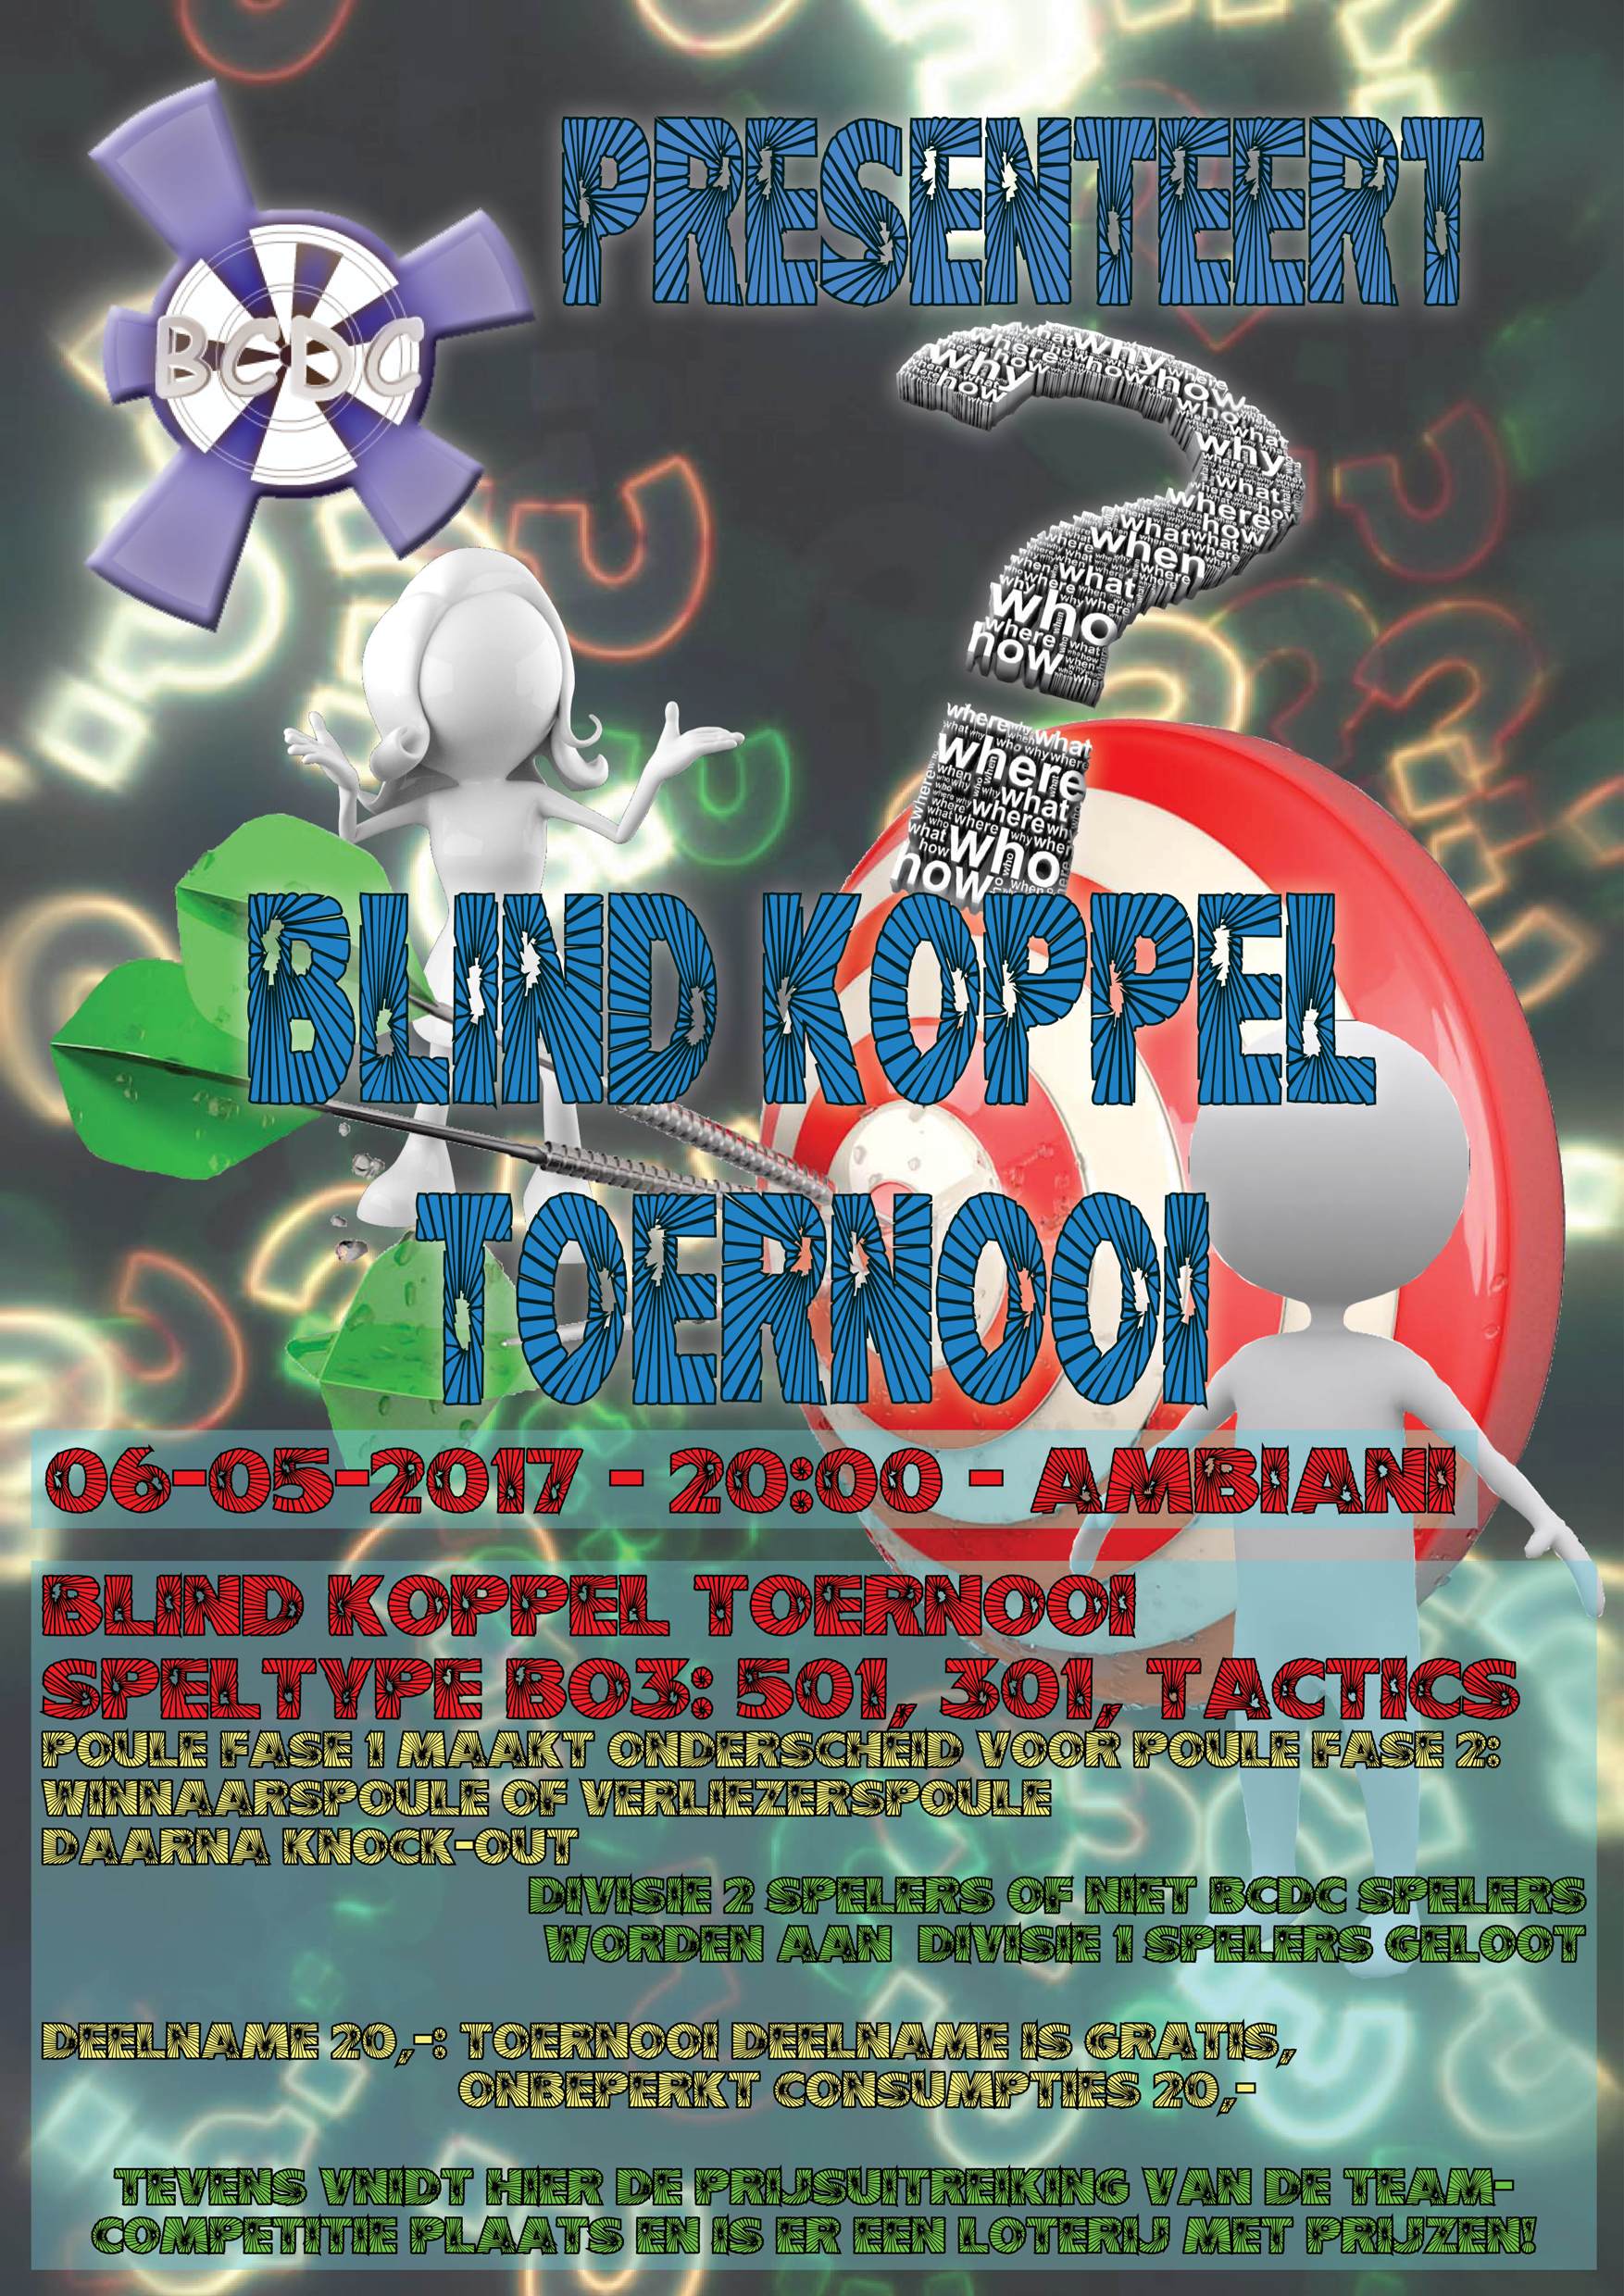 BCDC's Blind koppel toernooi!